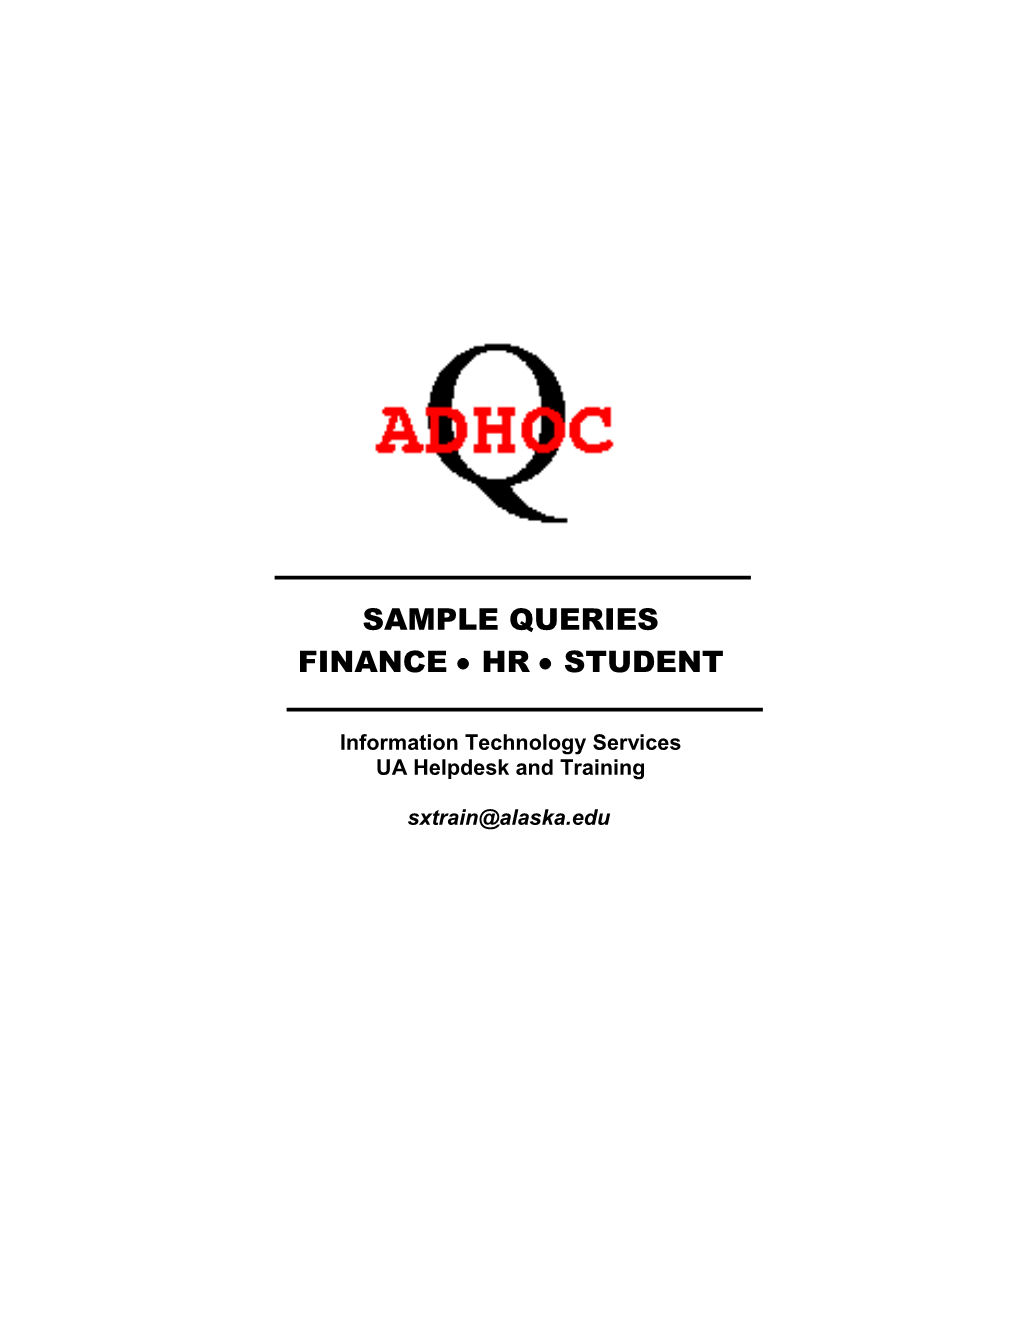 Sample QADHOC Queries Table of Contents